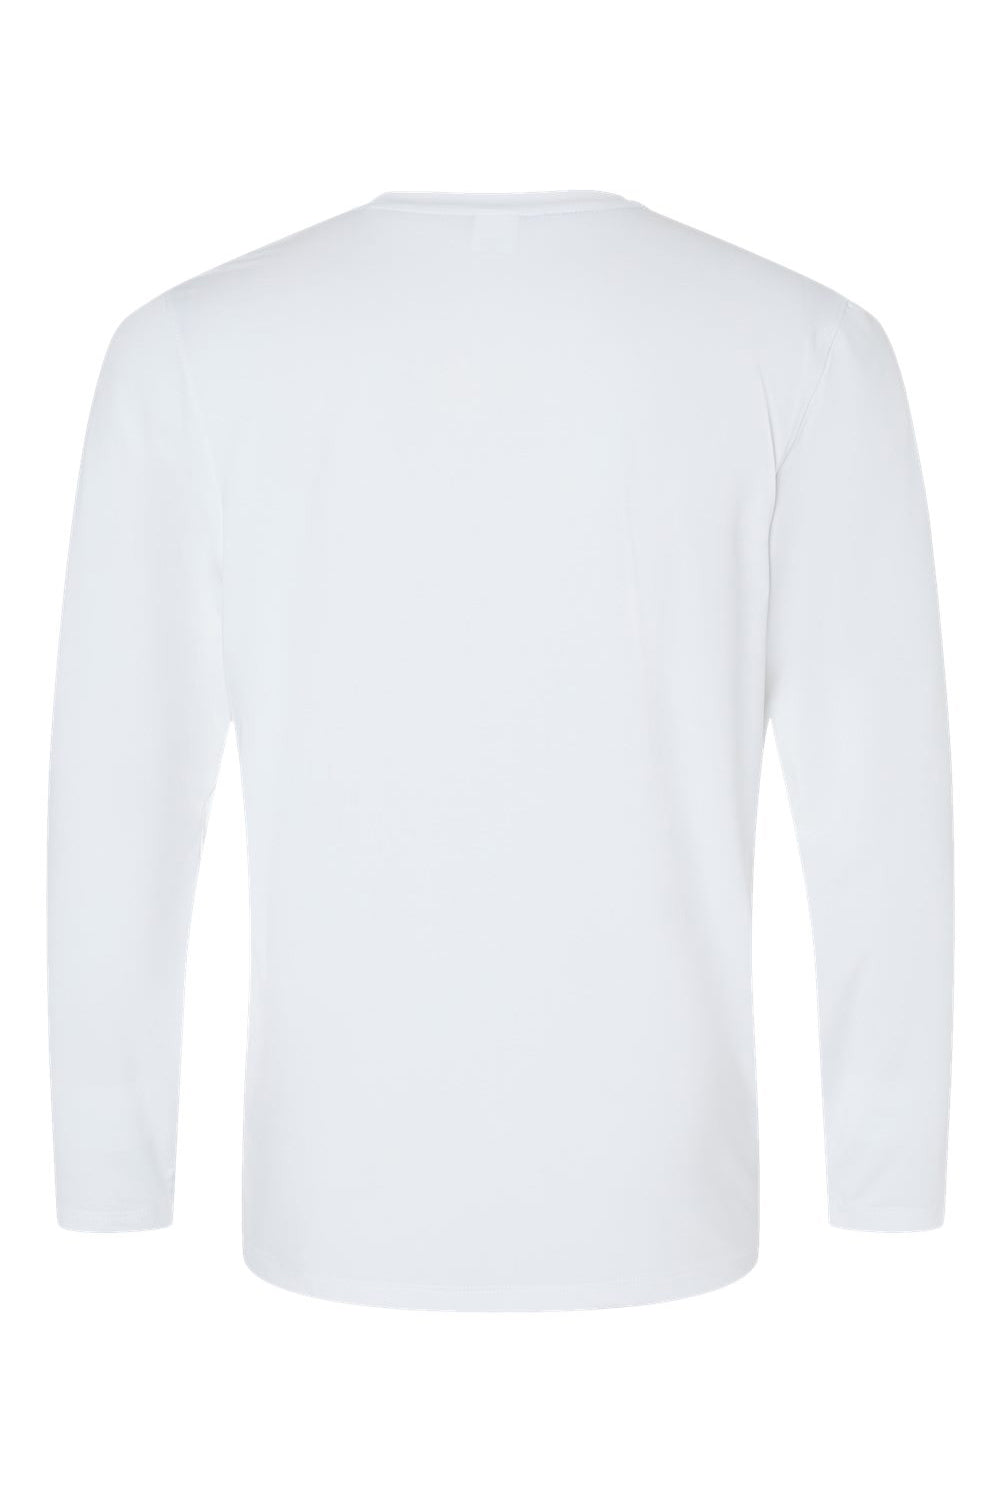 Paragon 222 Mens Aruba Extreme Performance Long Sleeve Crewneck T-Shirt White Flat Back